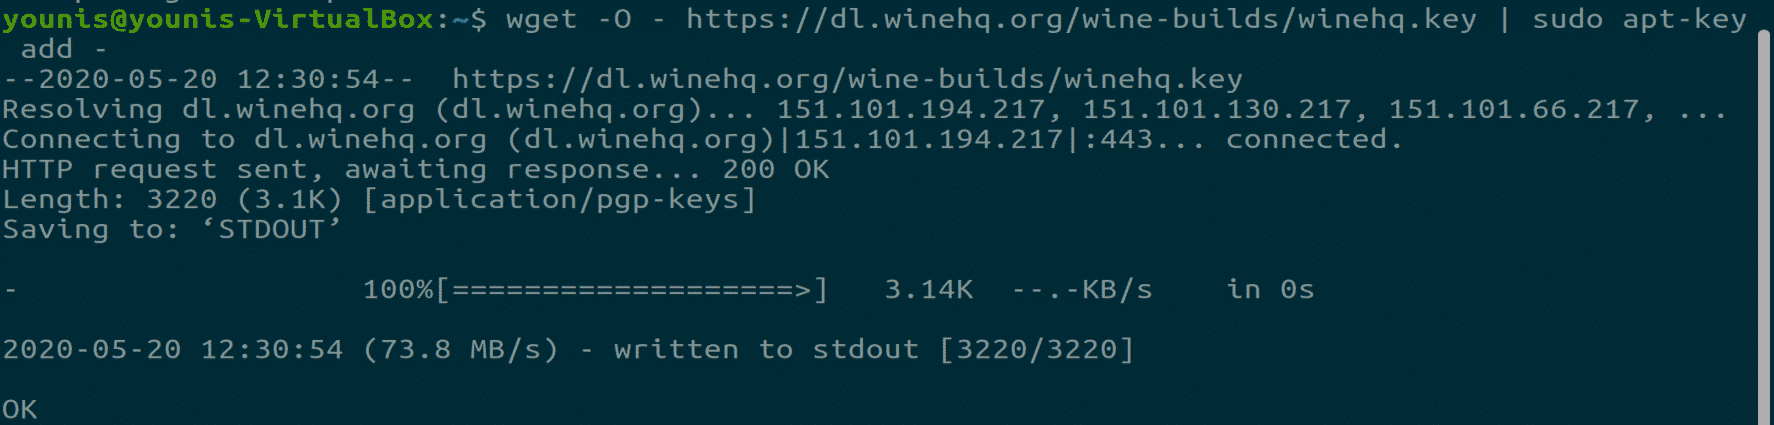 Sudo apt add. Репозитории Wine. Запуск программы Wine Linux 8.0 PNG. Wine Linux 8.0 PNG.